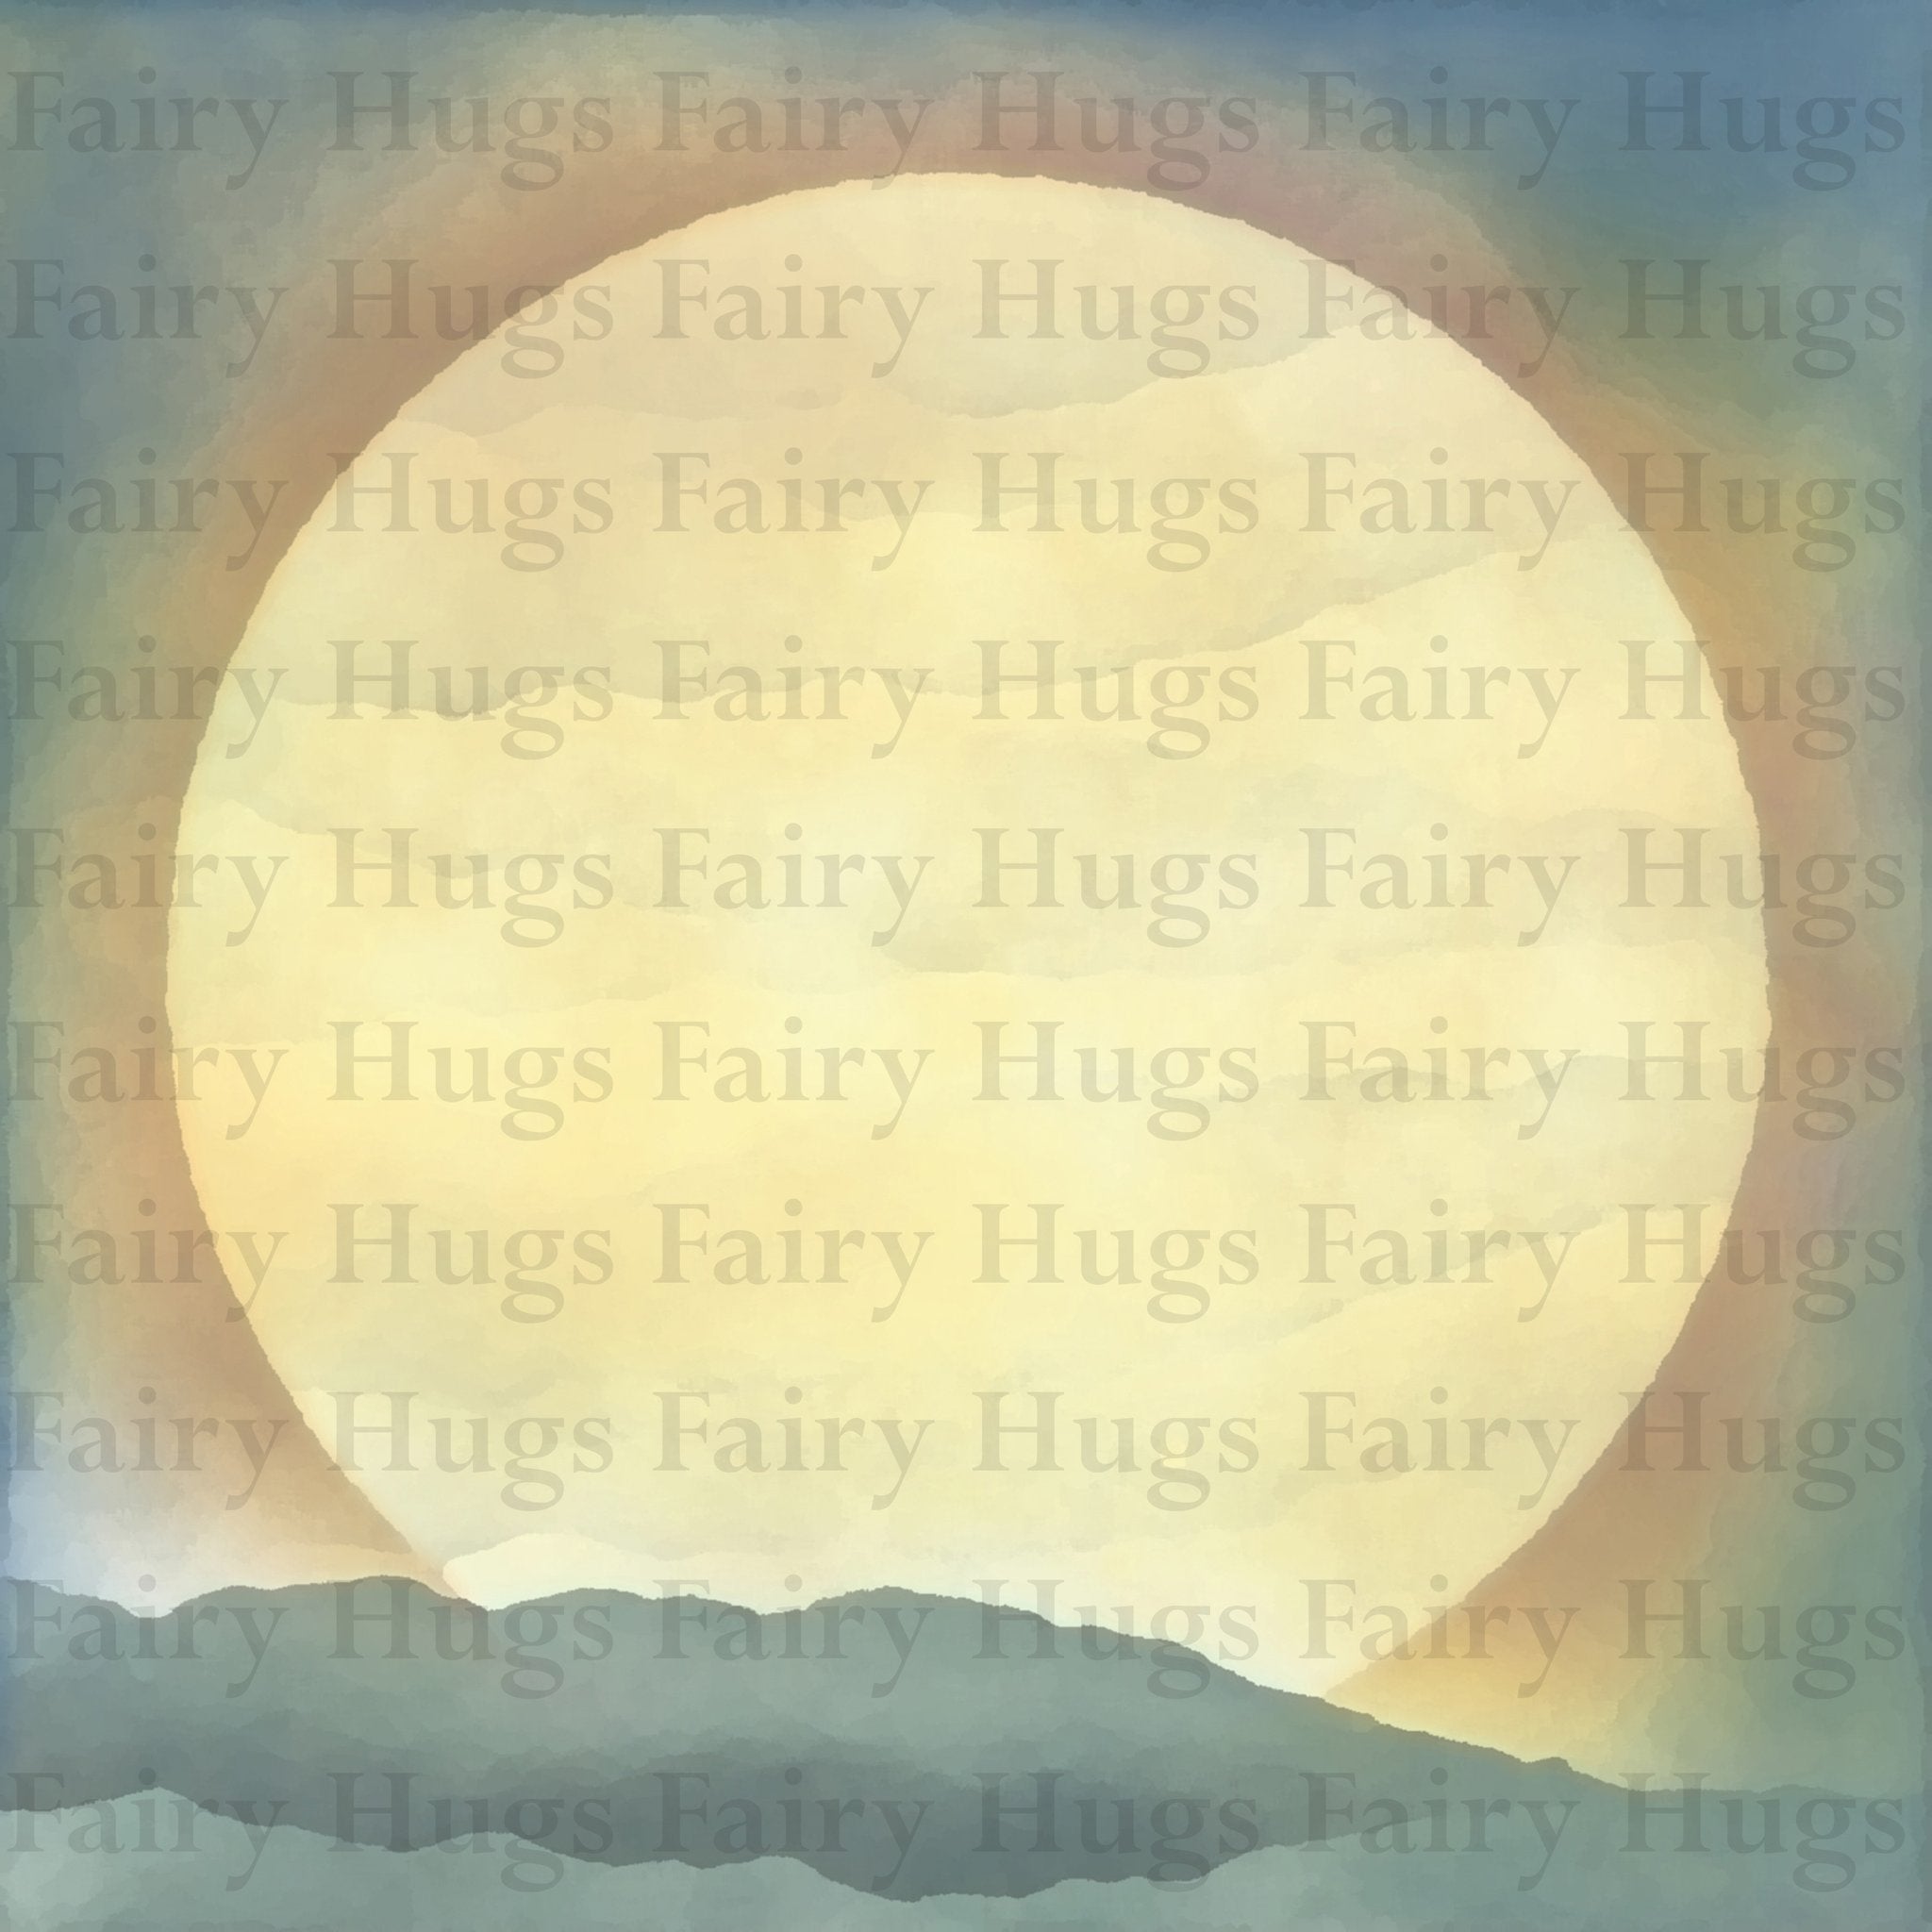 Fairy Hugs - Backgrounds - 6" x 6" - Full Moon